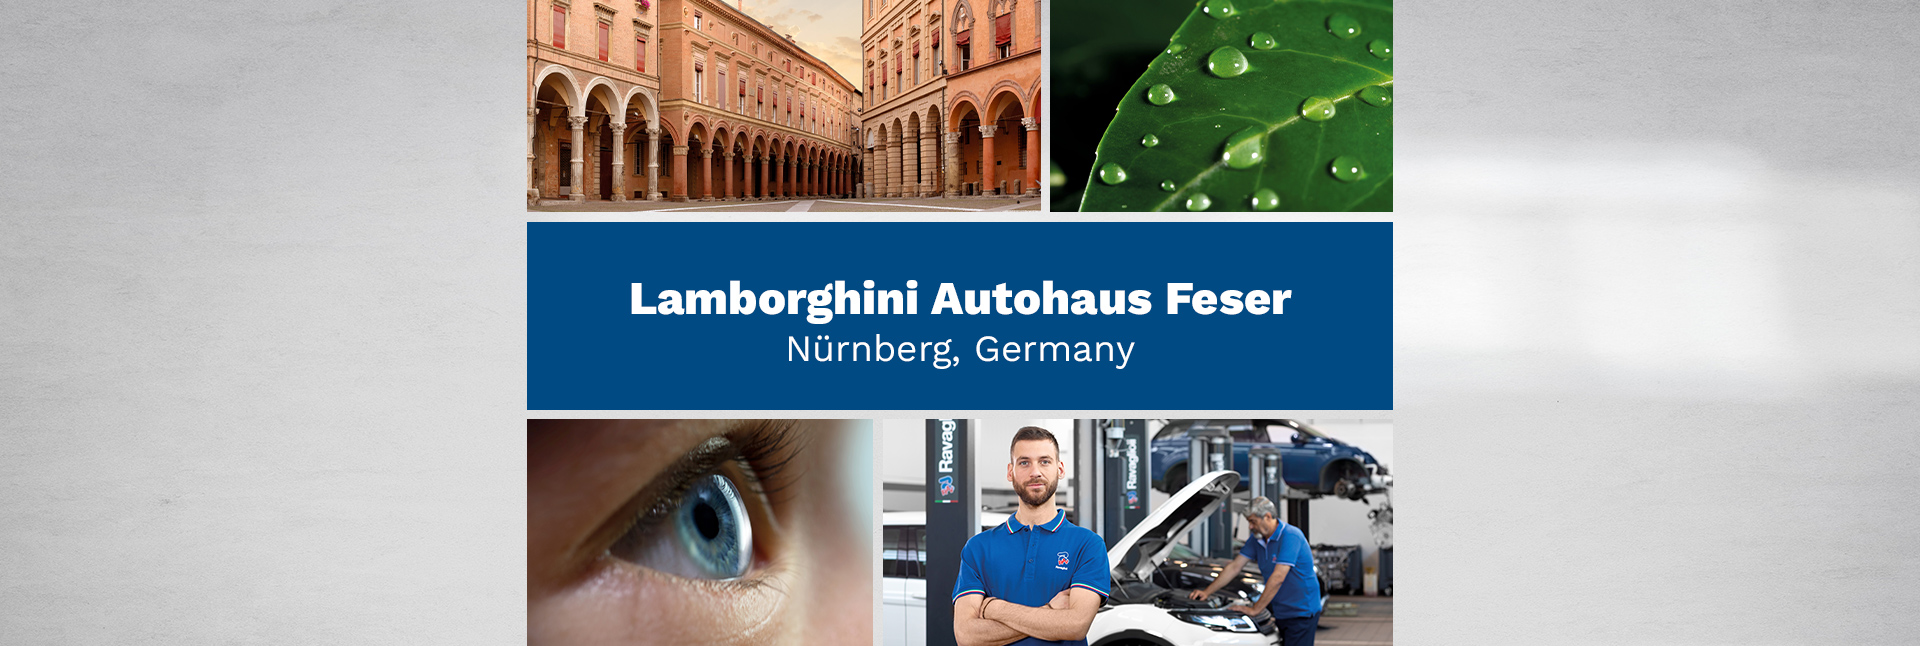 Lamborghini Autohaus Feser – Nürnberg, Germany